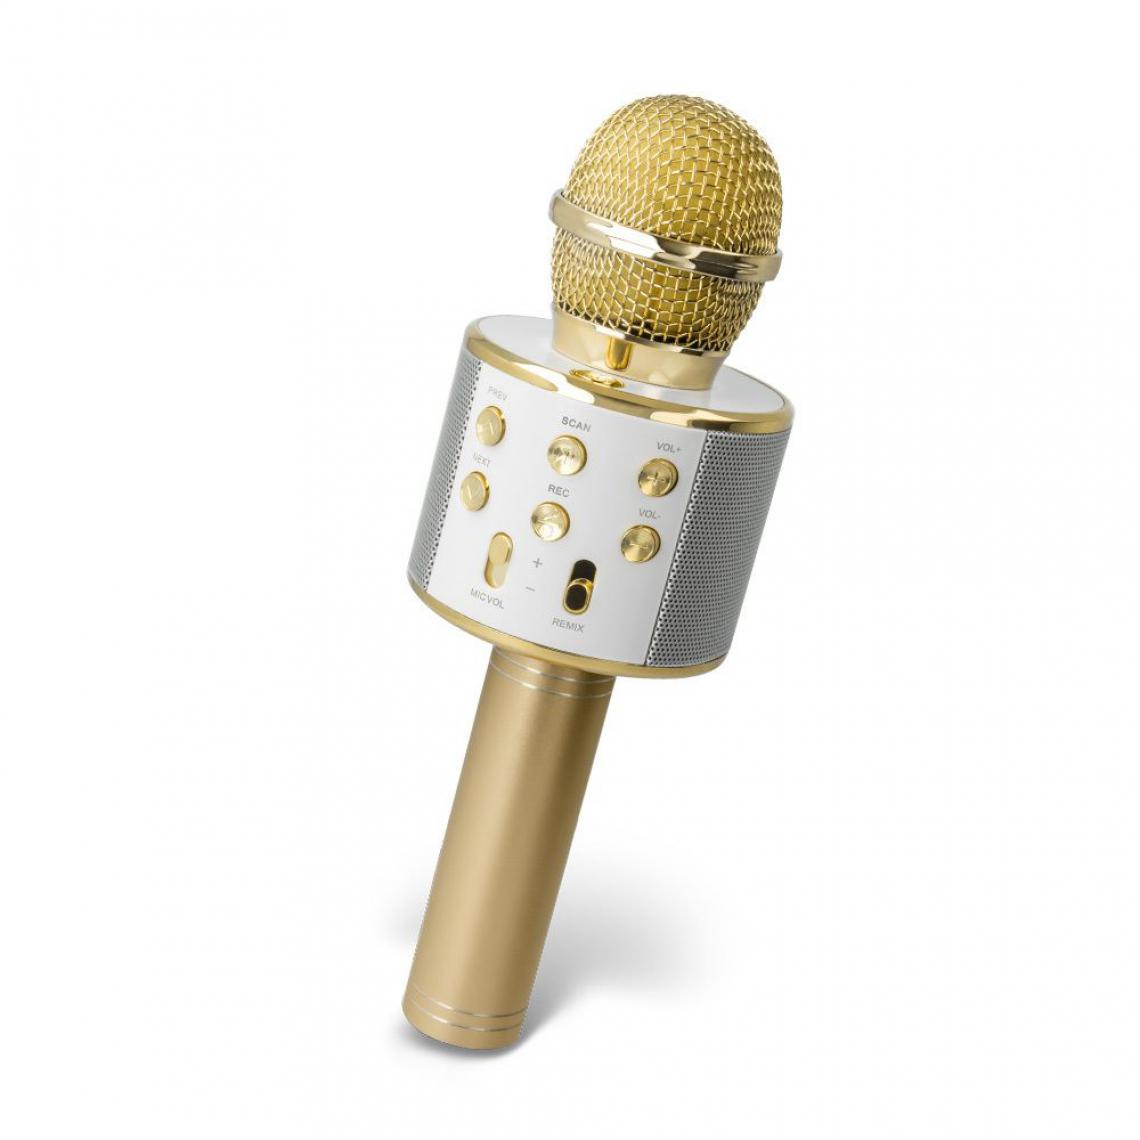 Ozzzo - Microphone Karaoke bluetooth haut parleur ozzzo Gold Or pour Apple iPhone XS Max - Autres accessoires smartphone